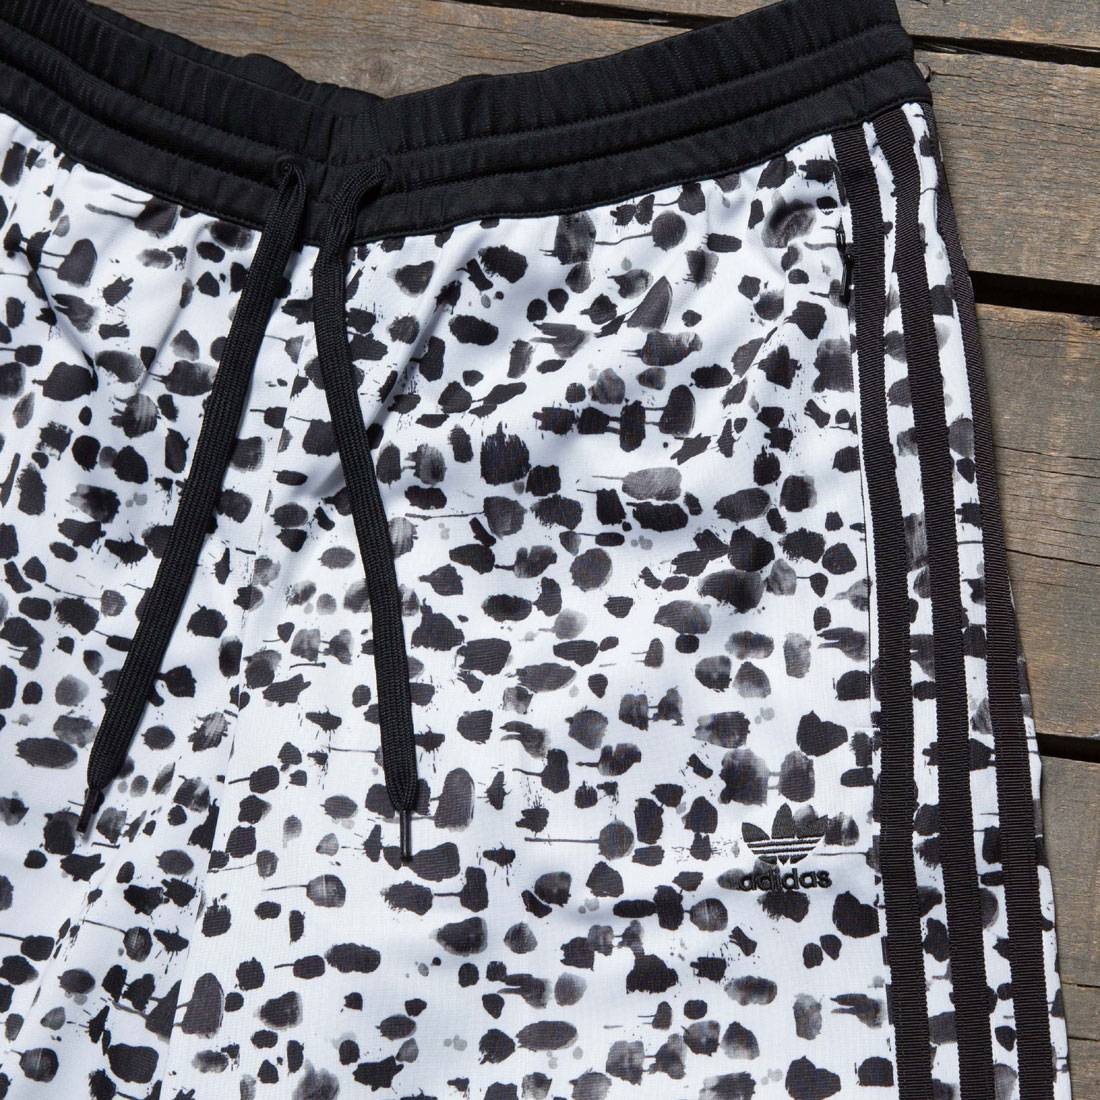 Adidas Women Inked Culotte Pants white black